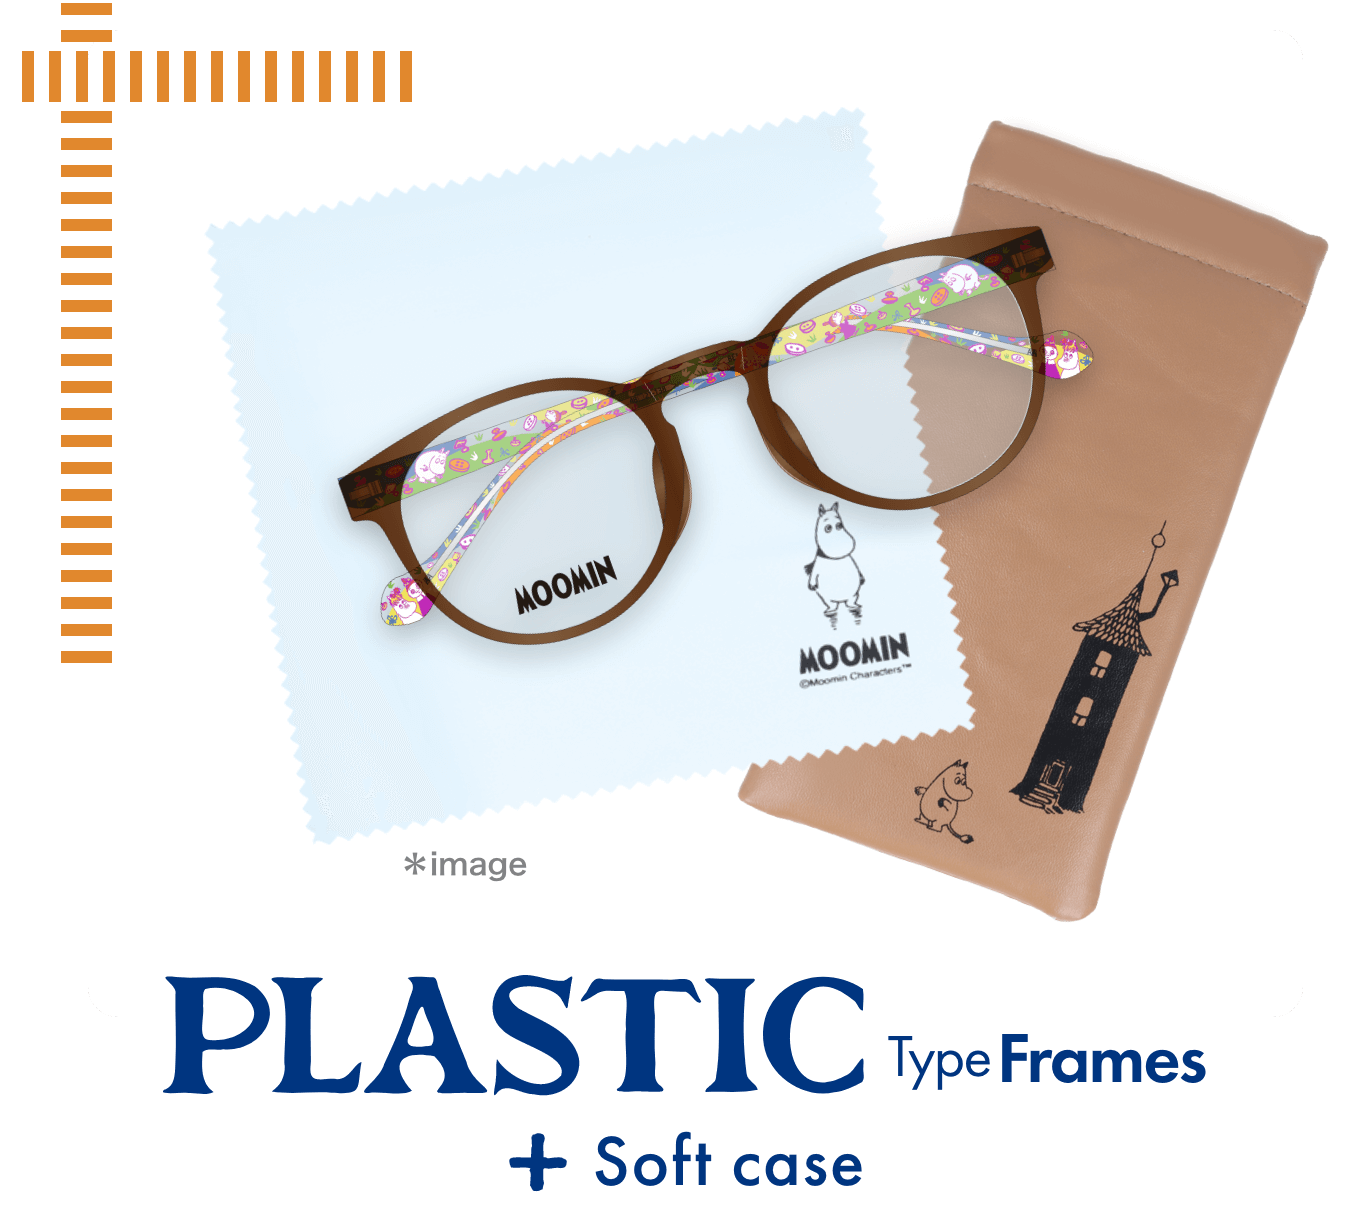 PLASTIC TypeFrames + Soft case